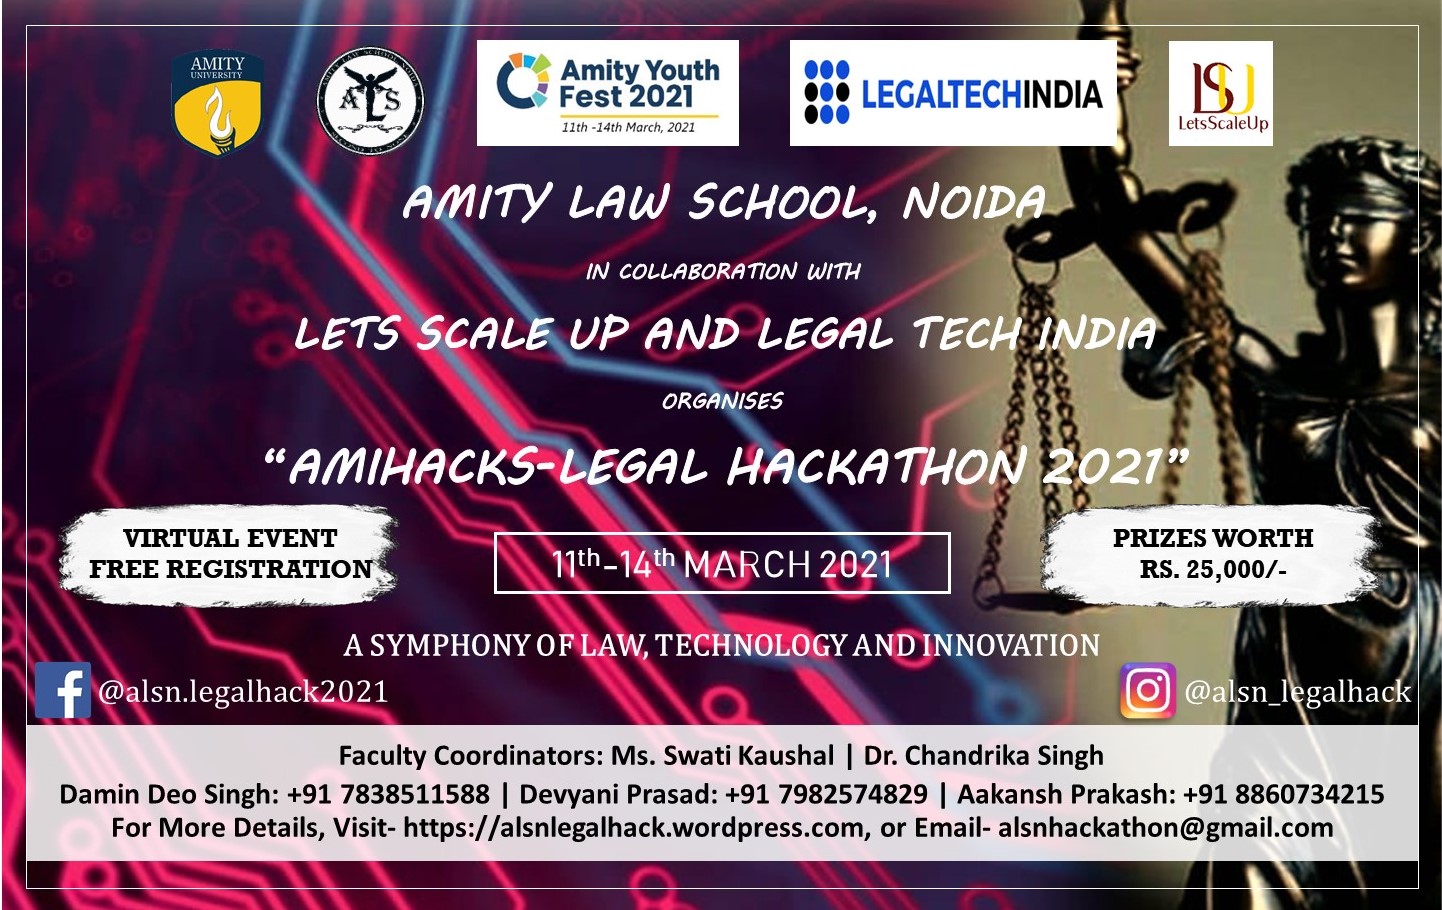 AmiHacks - Legal Hackathon 2021